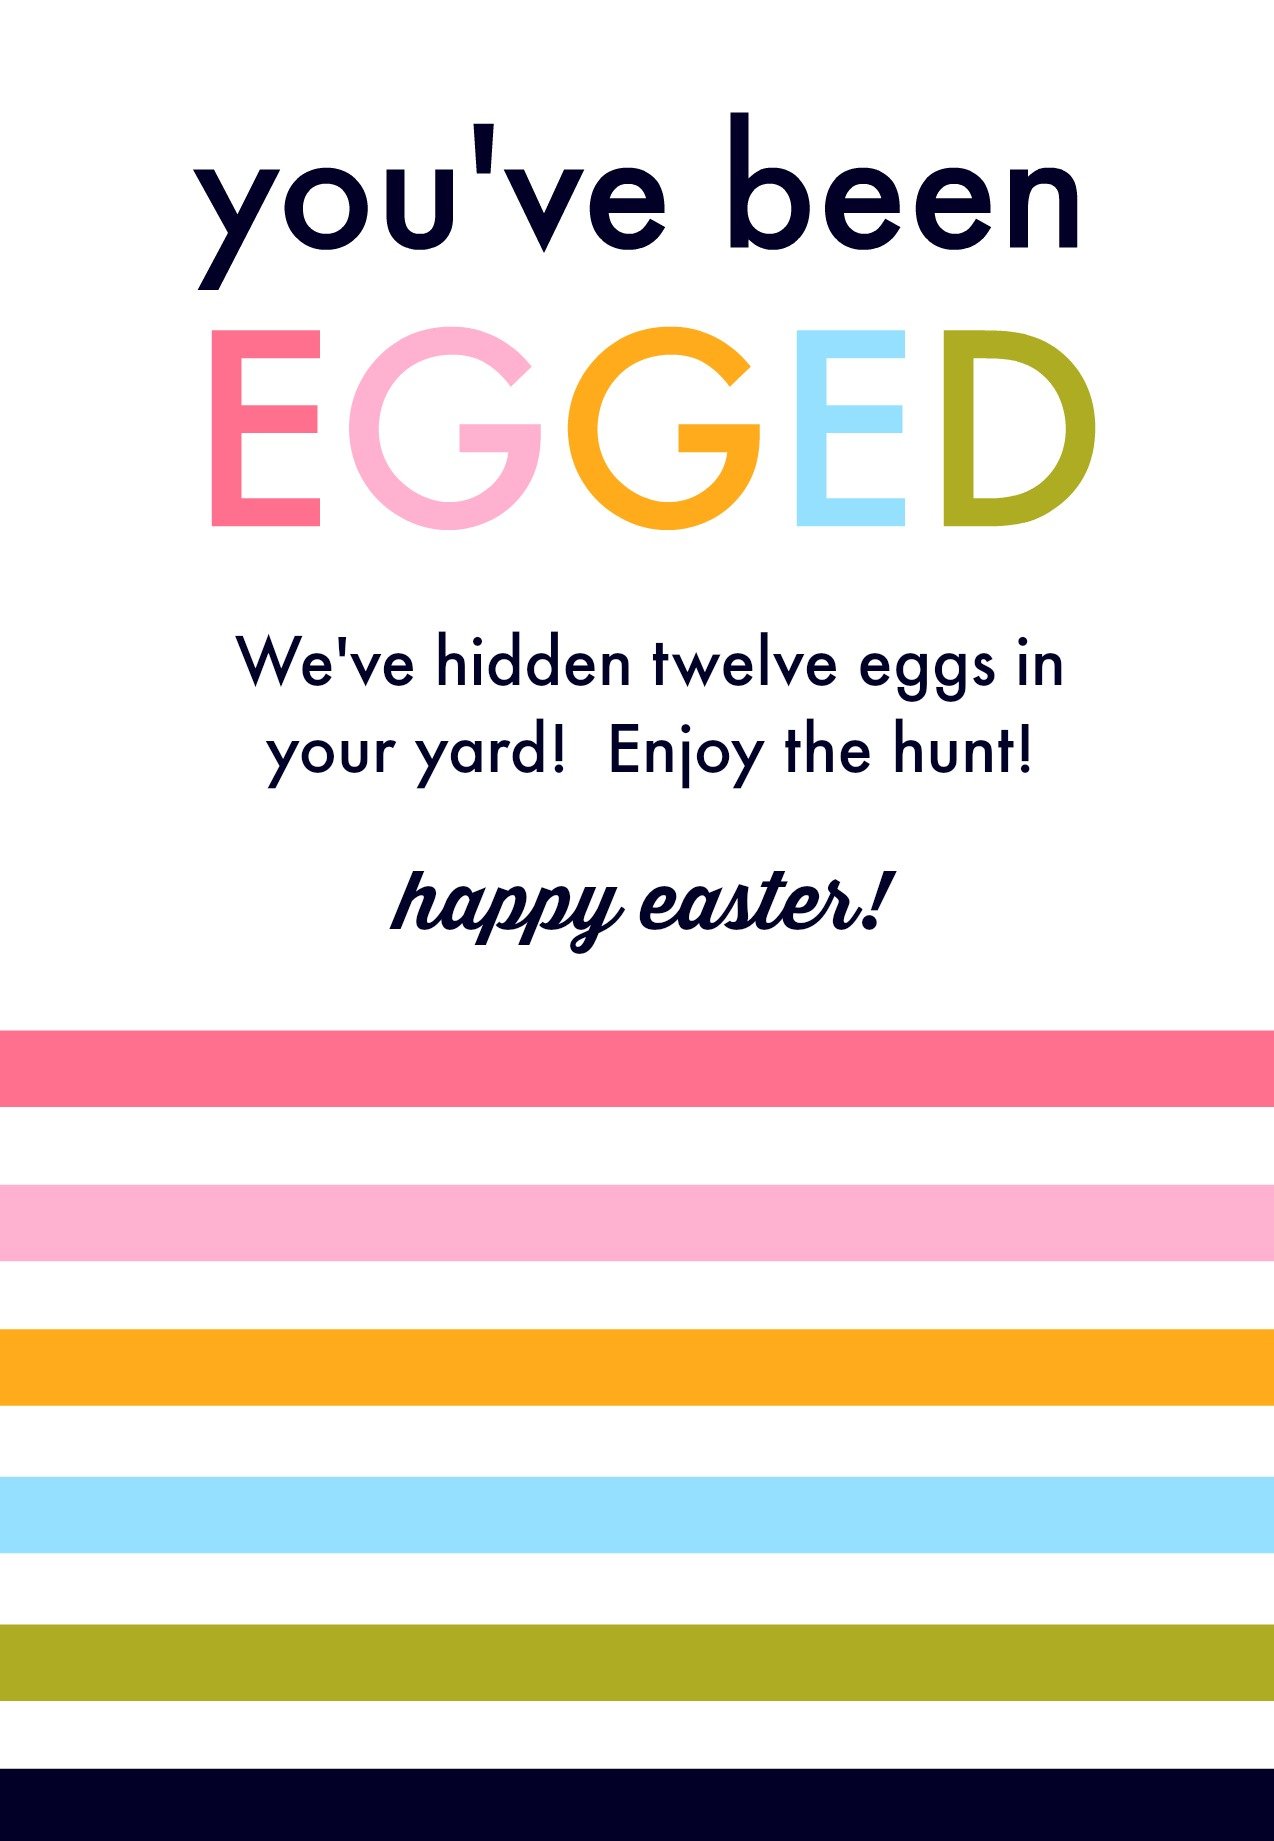 You've Been Egged | An Easter Service Activity | oldsaltfarm.com